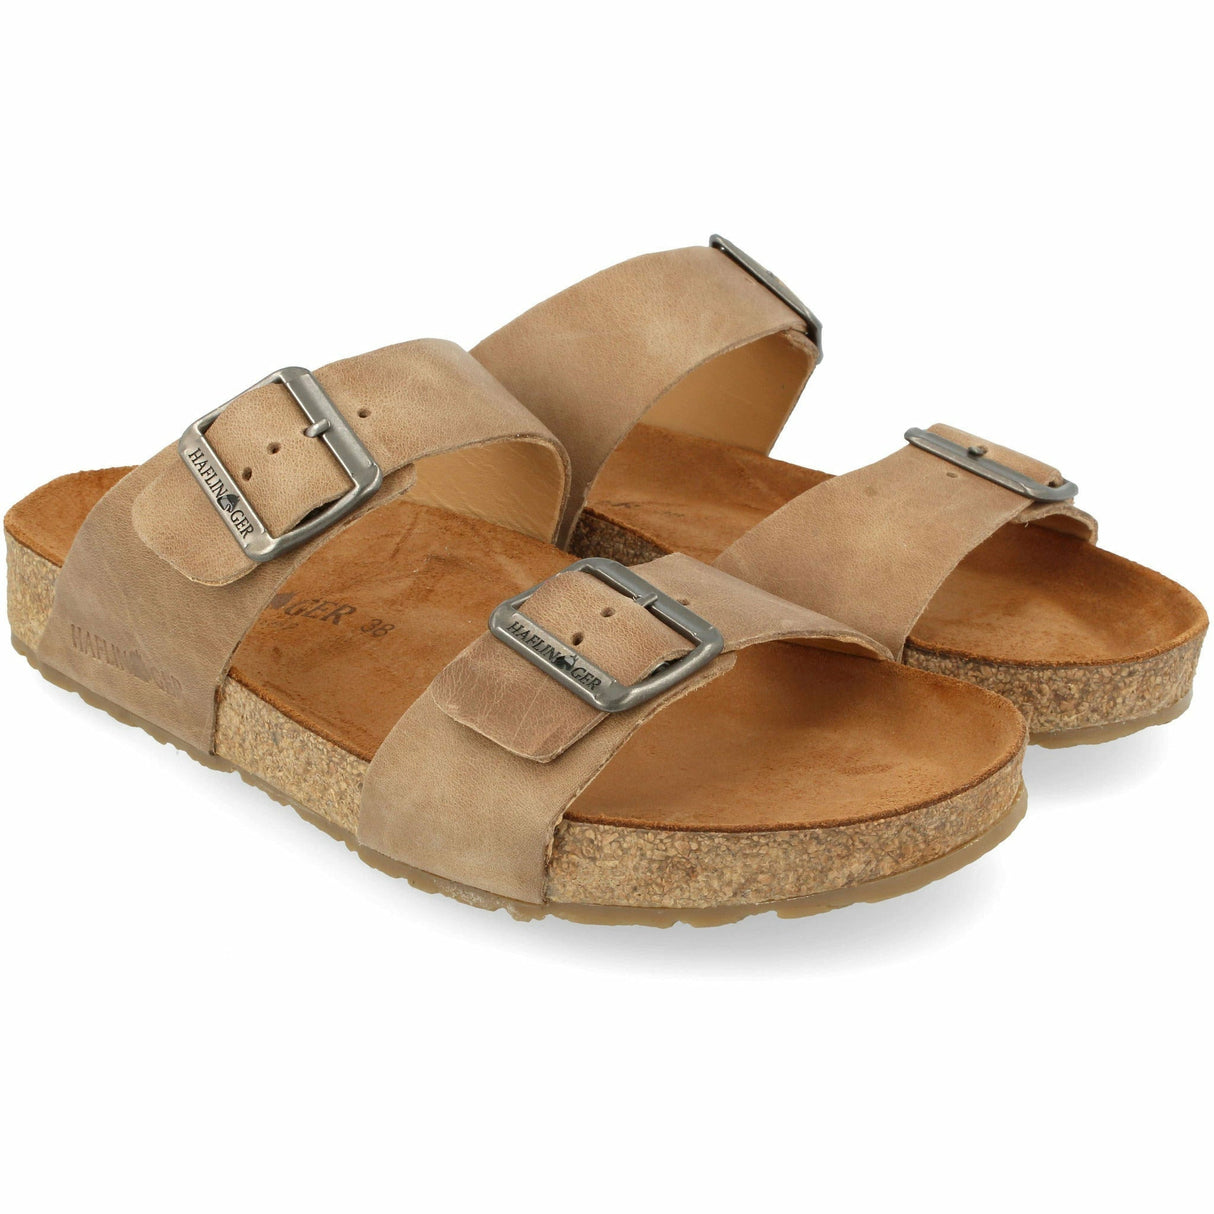 Haflinger Andrea Leather Sandals  -  36 / Taupe